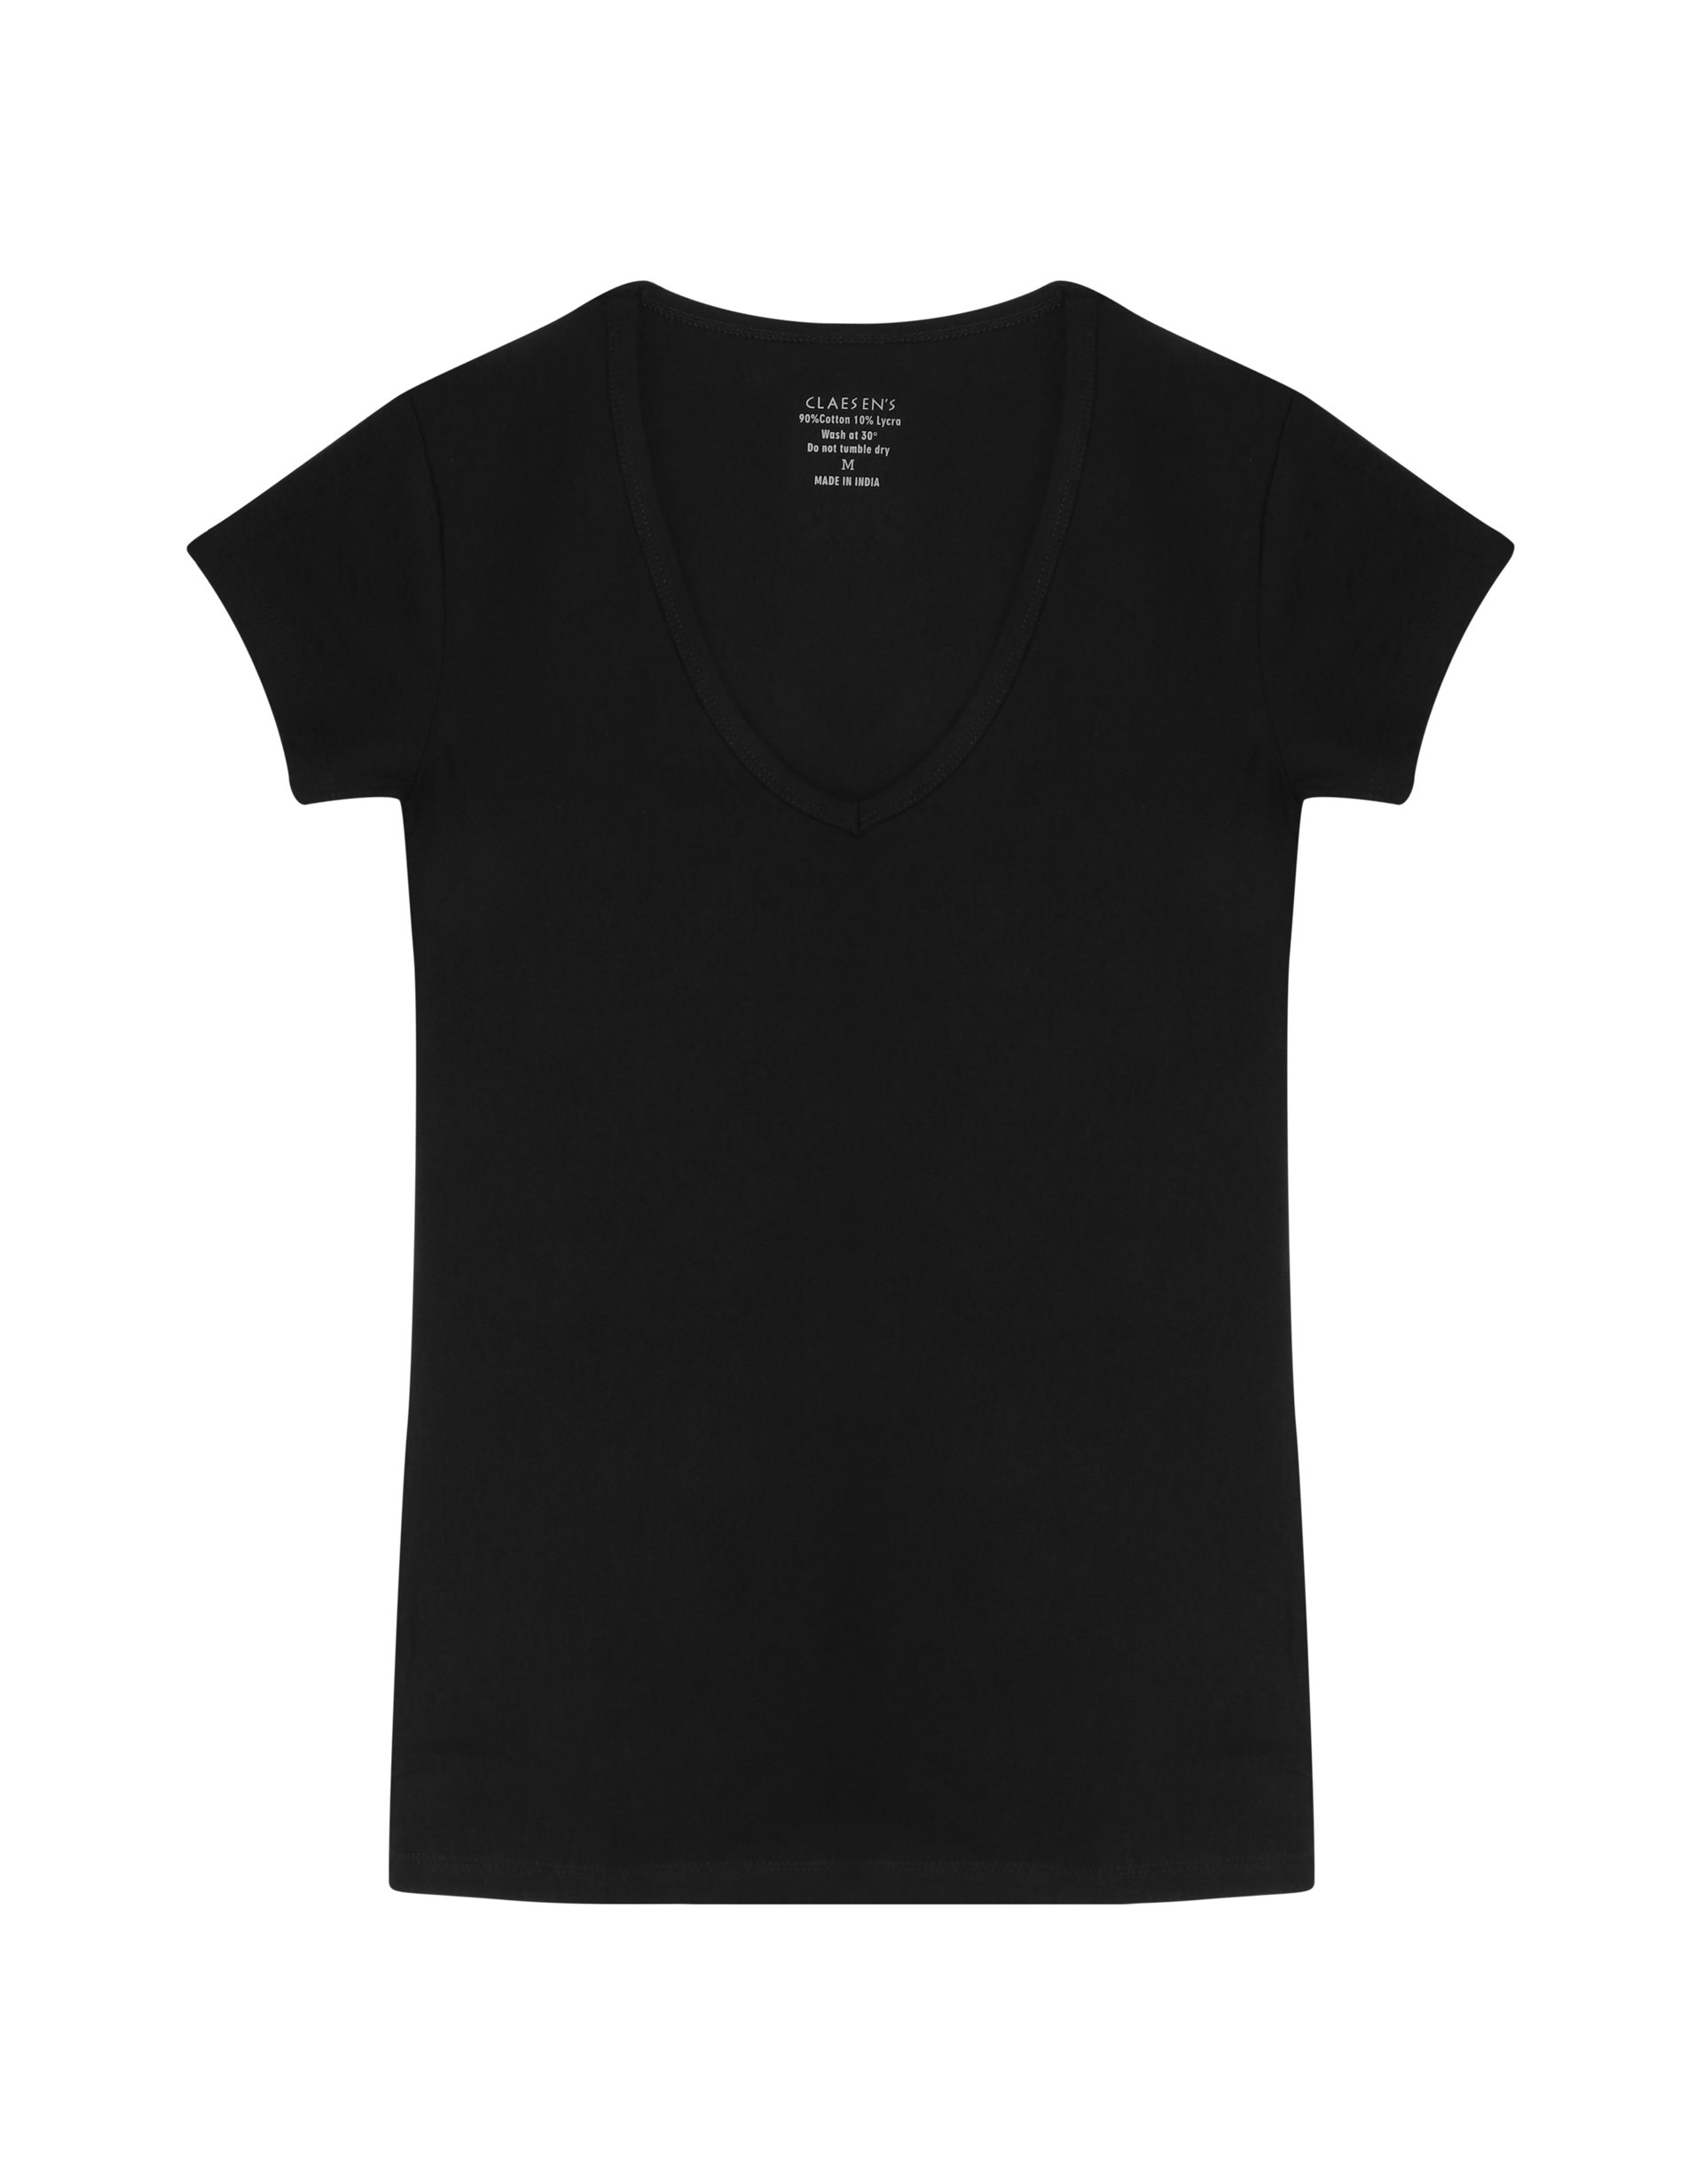 Claesen's dames Basics T-shirt (1-pack), V-hals T-shirt korte mouw, zwart